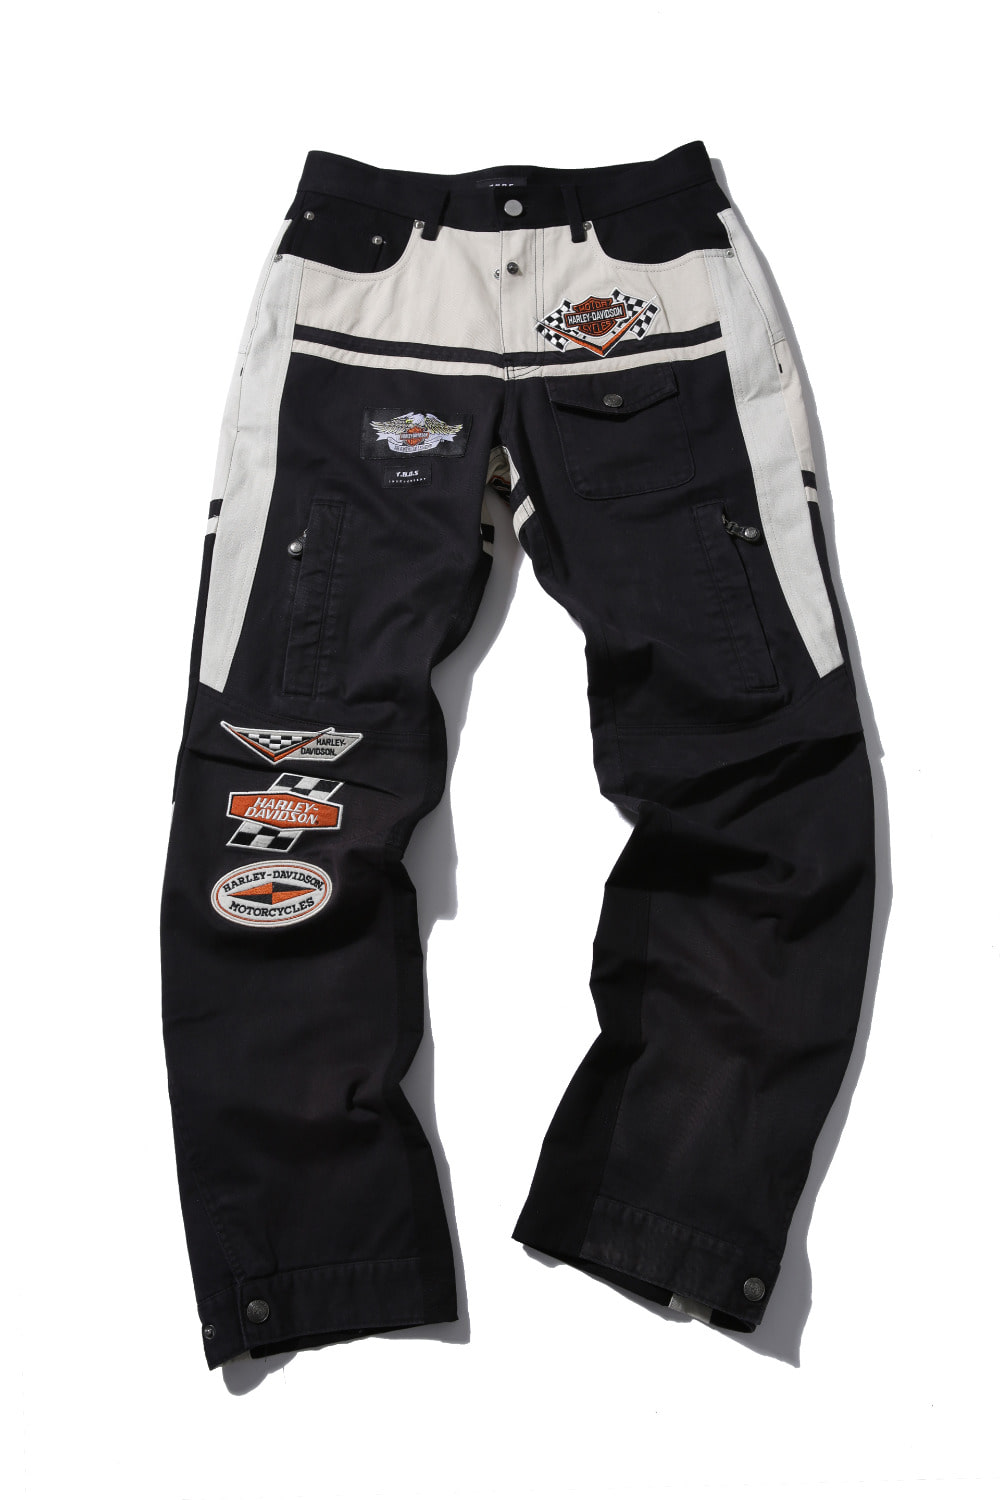 Harley Davidson jacket detail pants